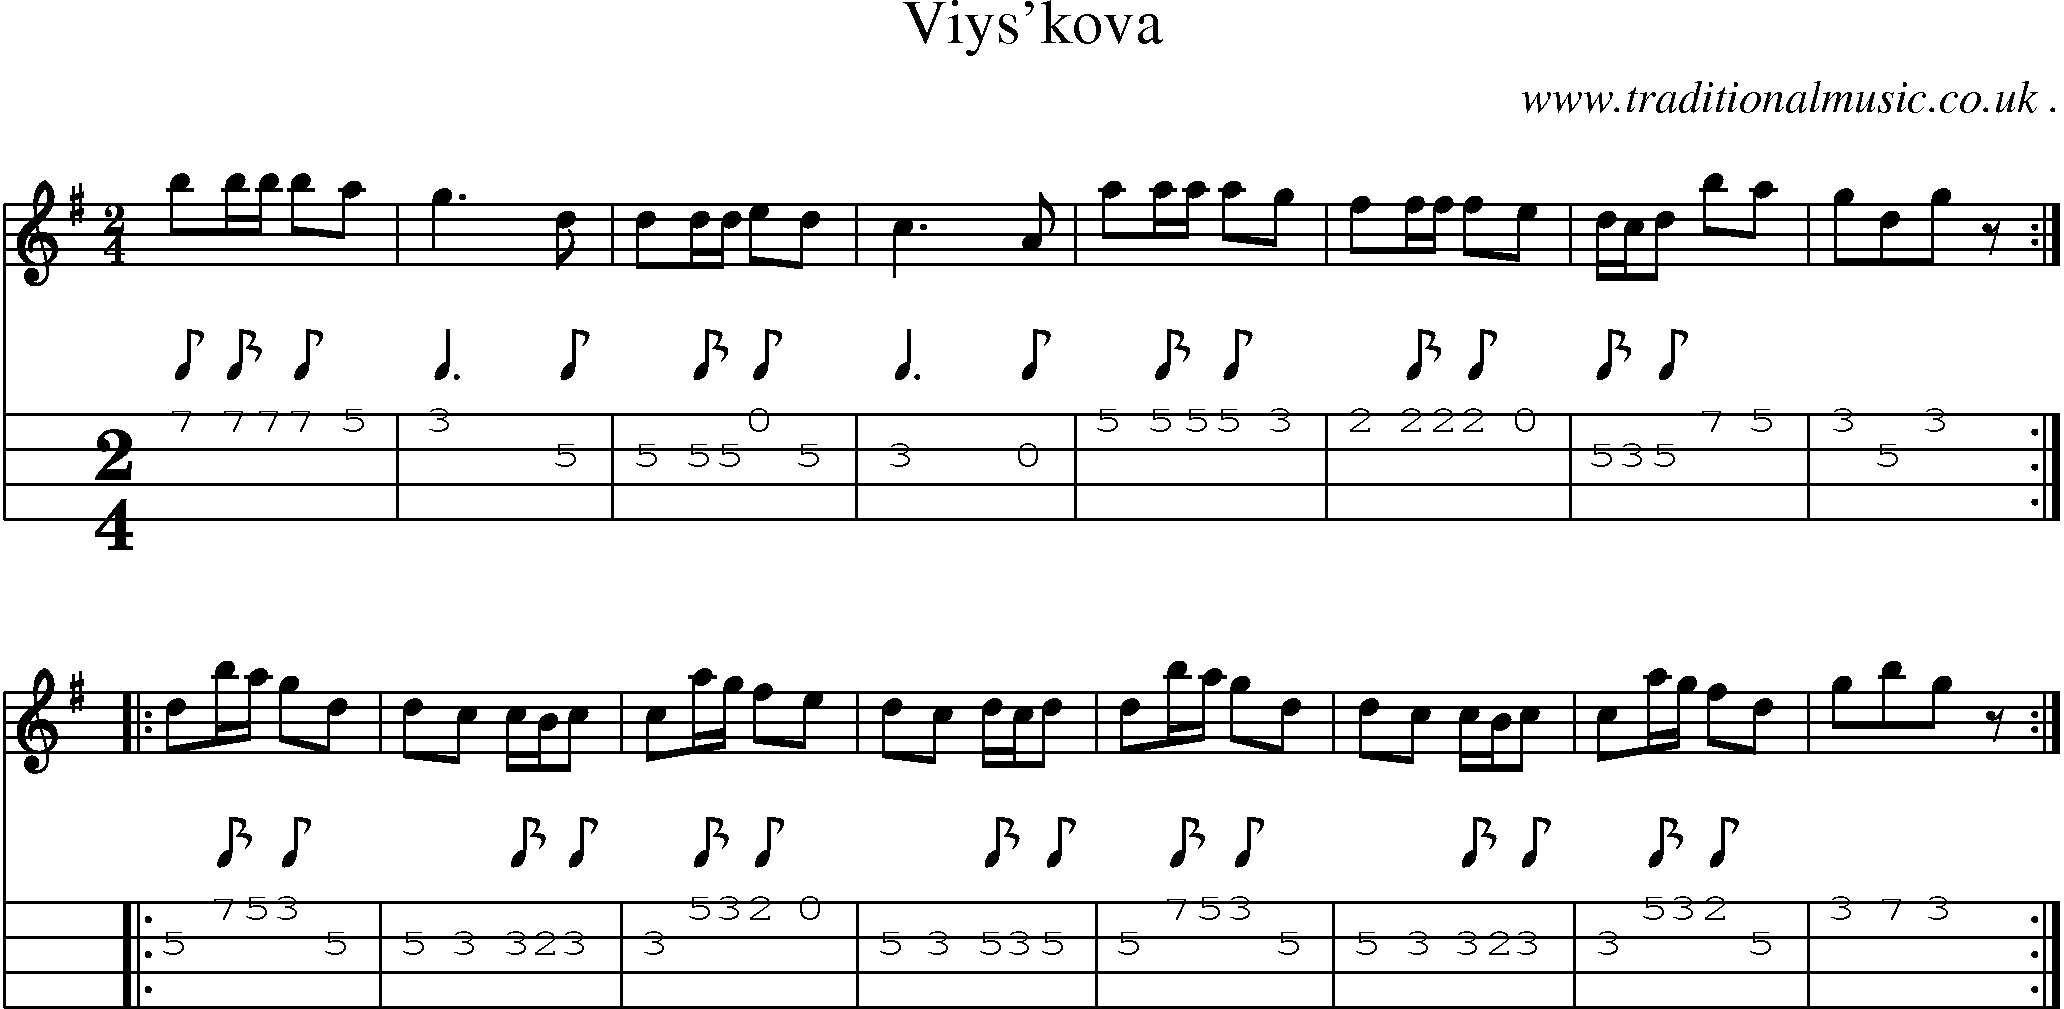 Sheet-Music and Mandolin Tabs for Viyskova